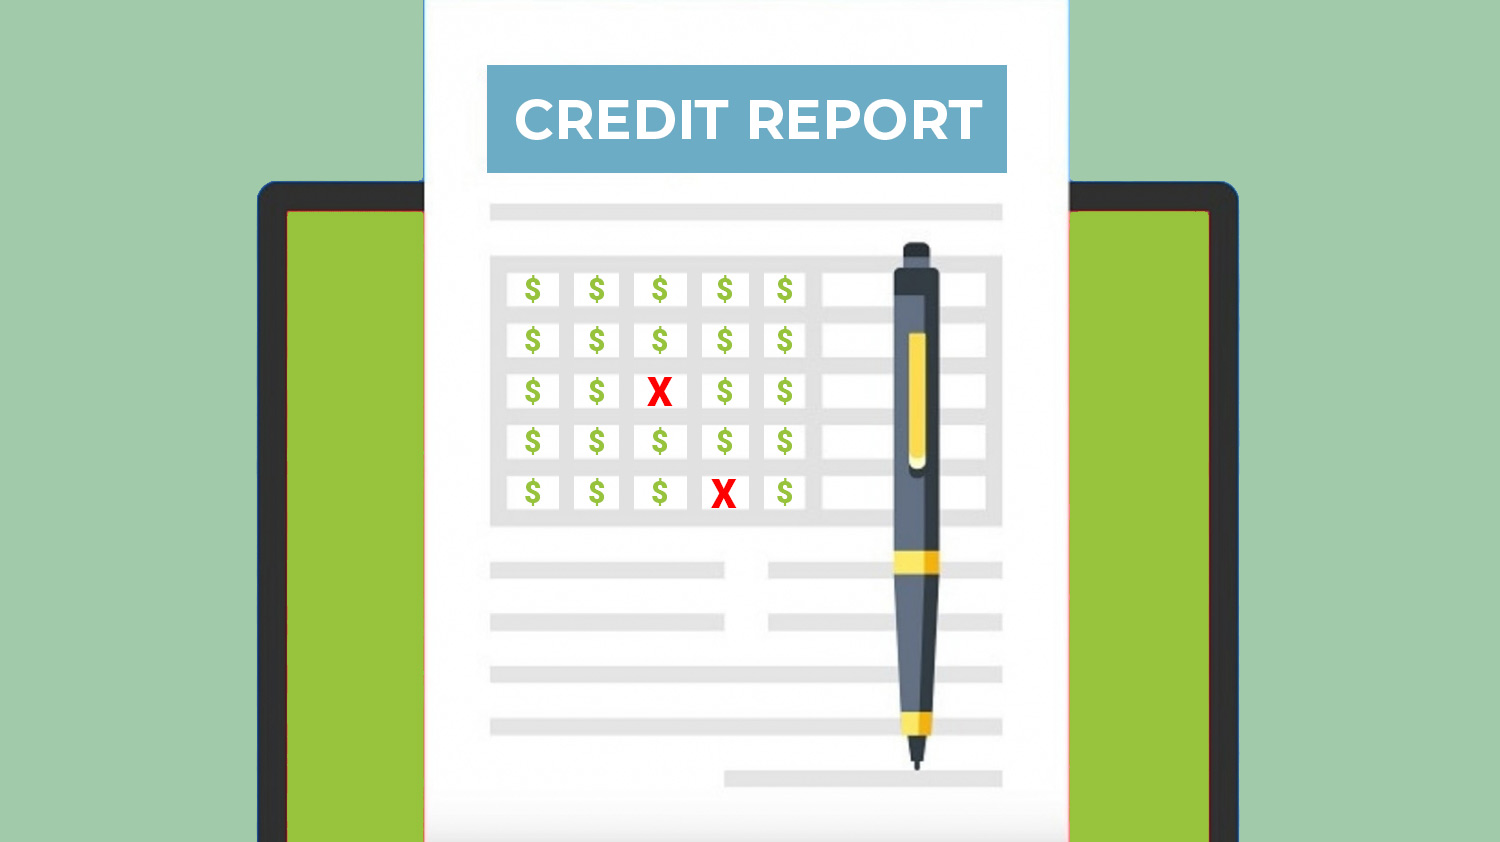 Credit Report Errors